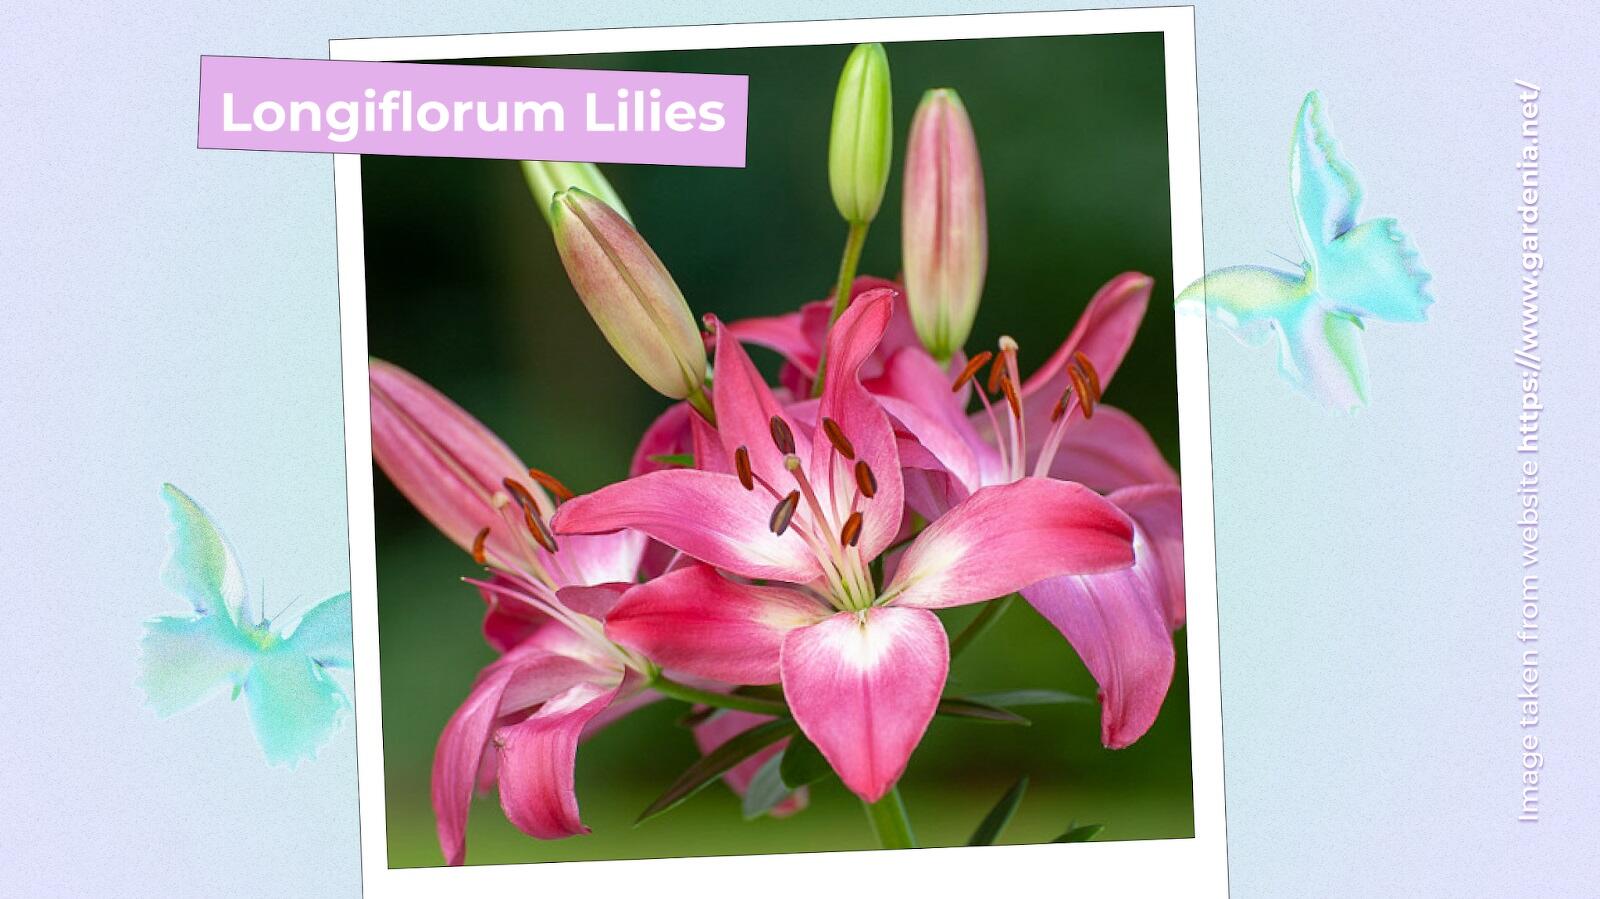 Longiflorum Lilies